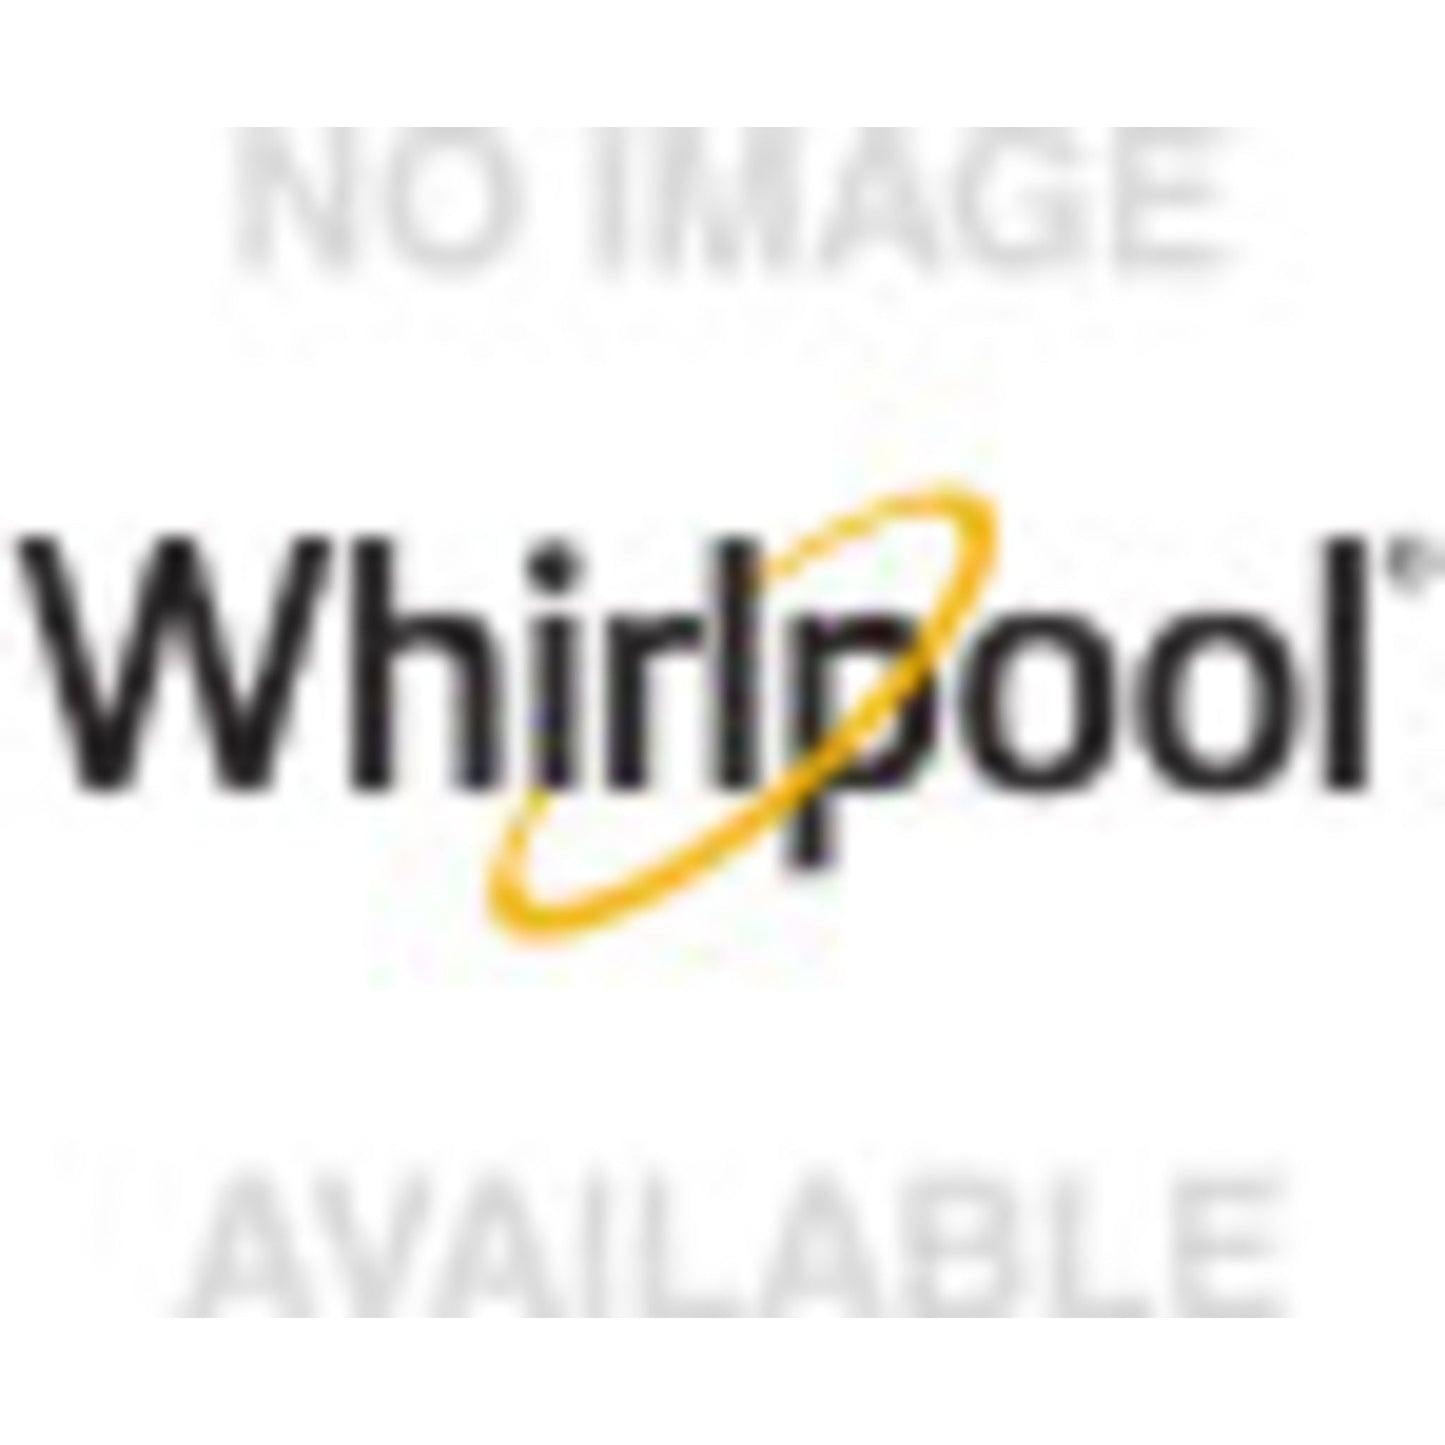 Whirlpool Dishwasher Stainless Steel Tub (WDT750SAKZ) - Stainless Steel